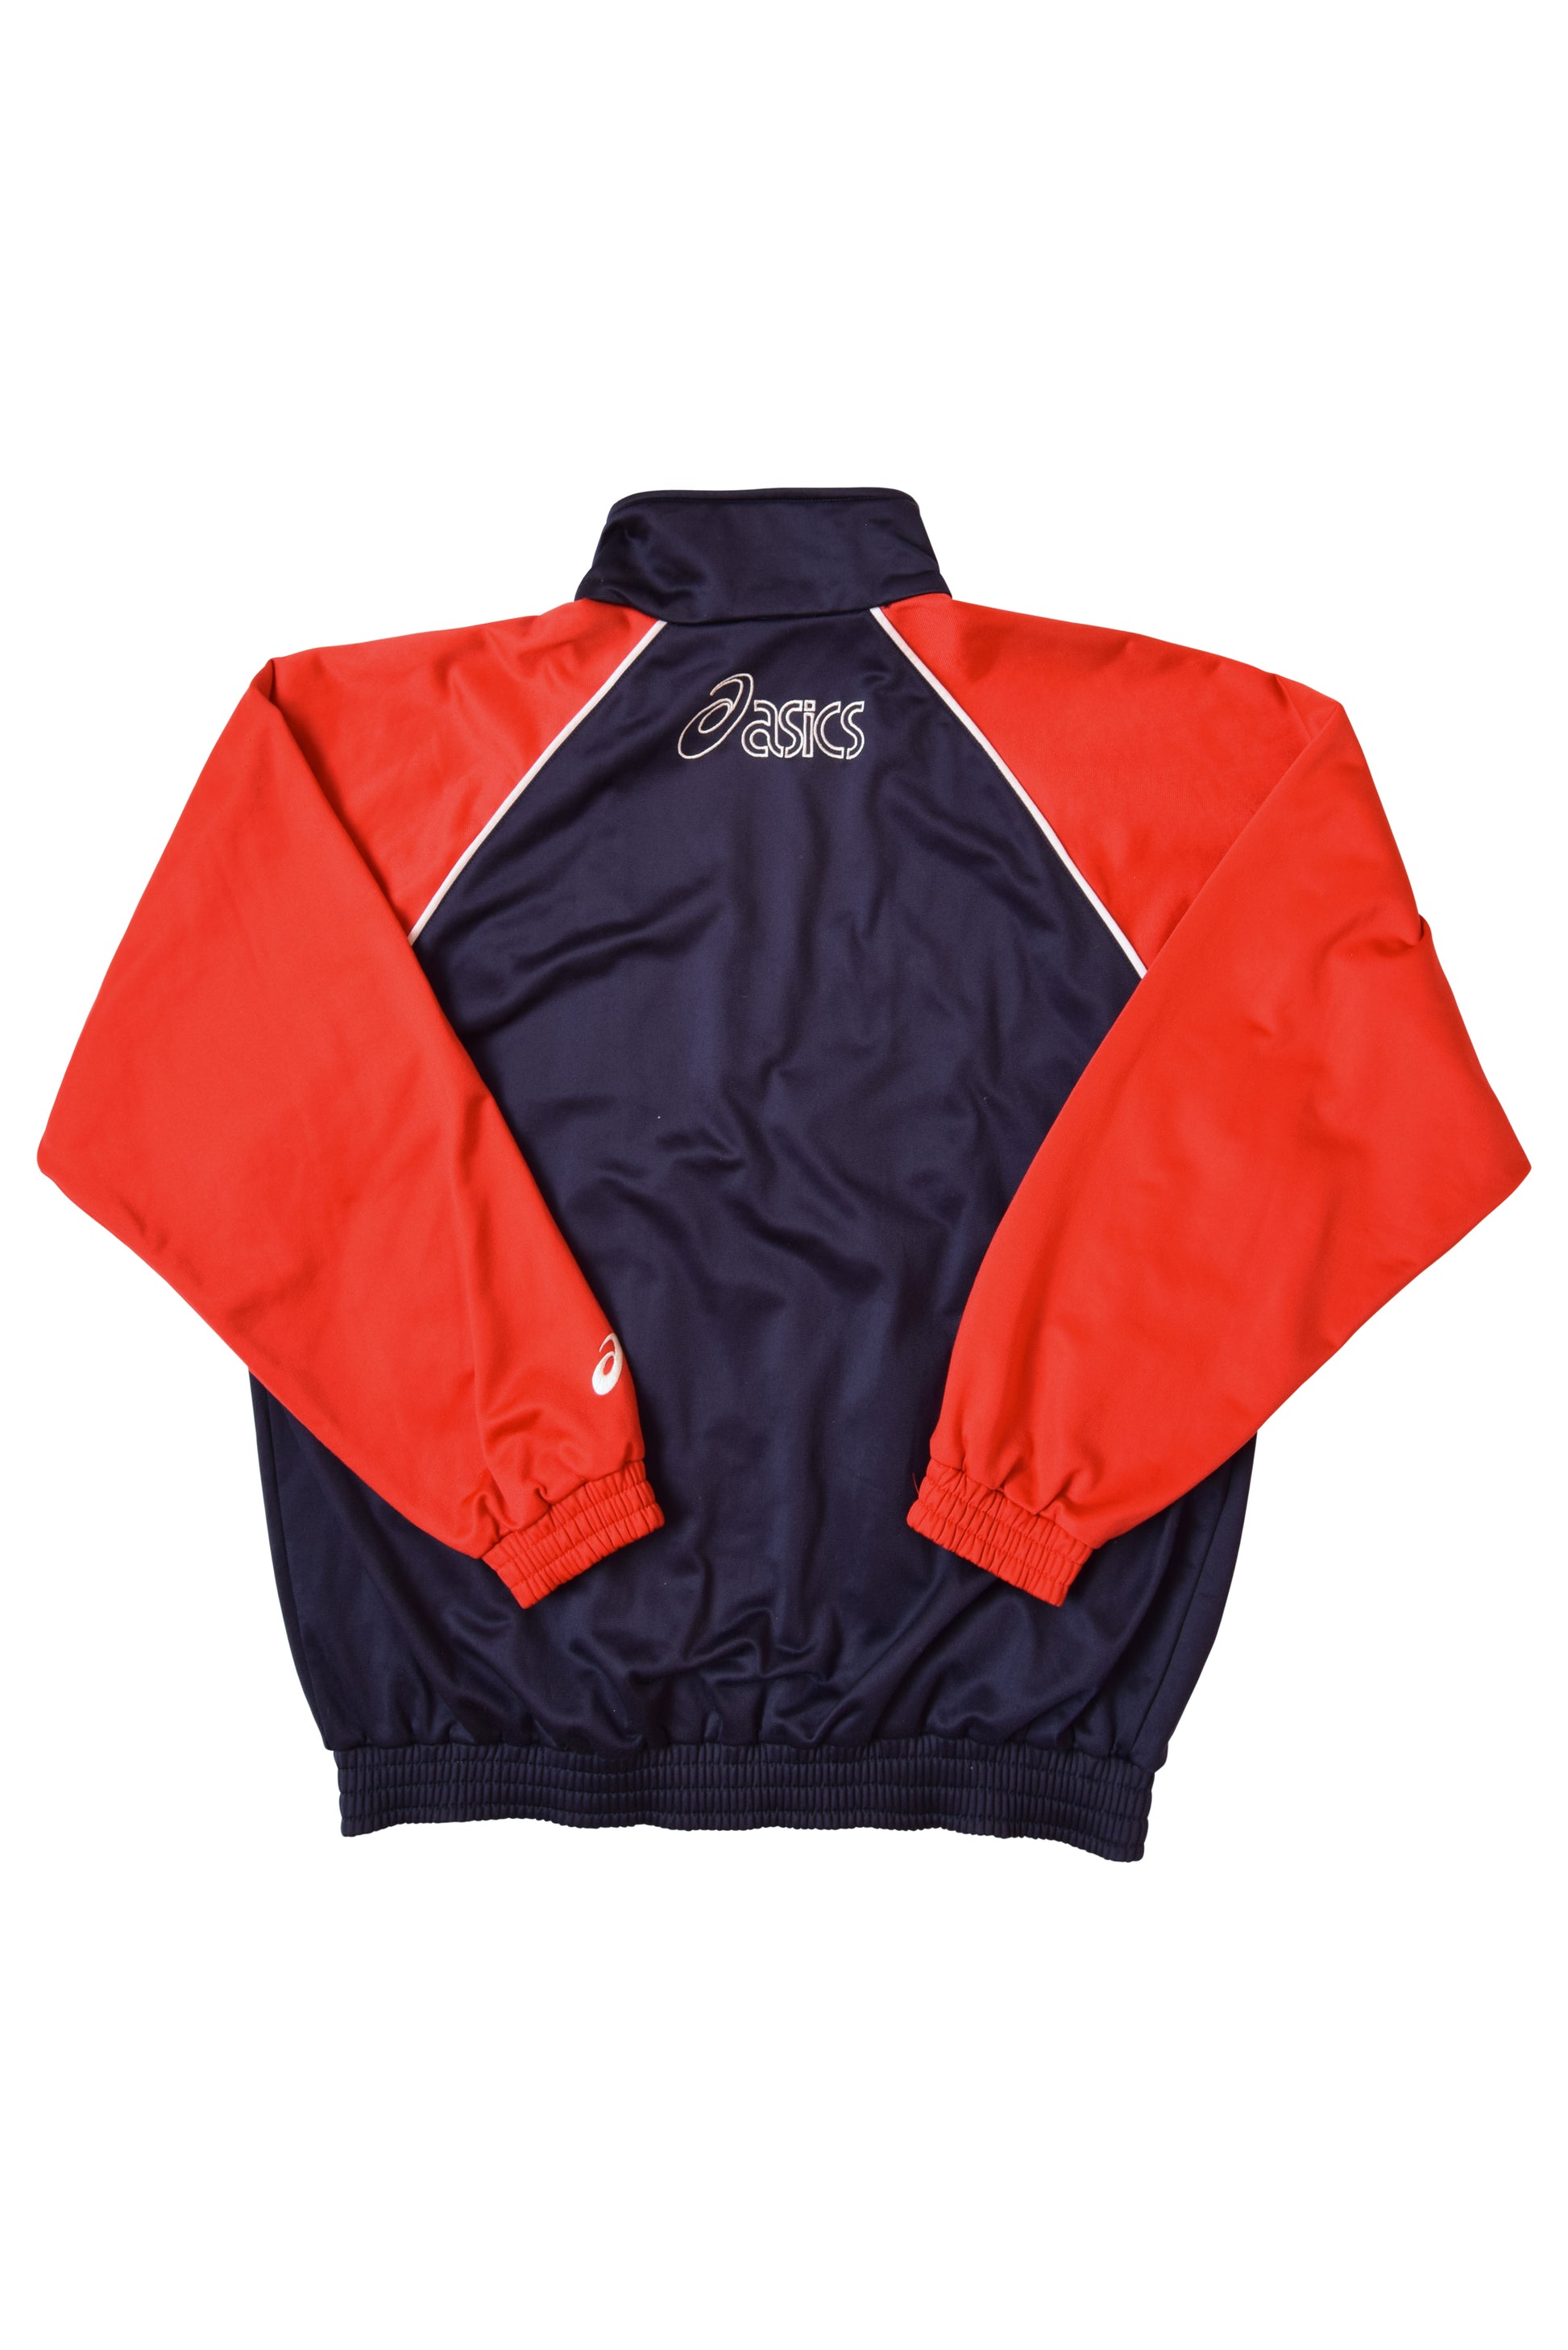 Vintage Asics Jacket 90's Size M-L